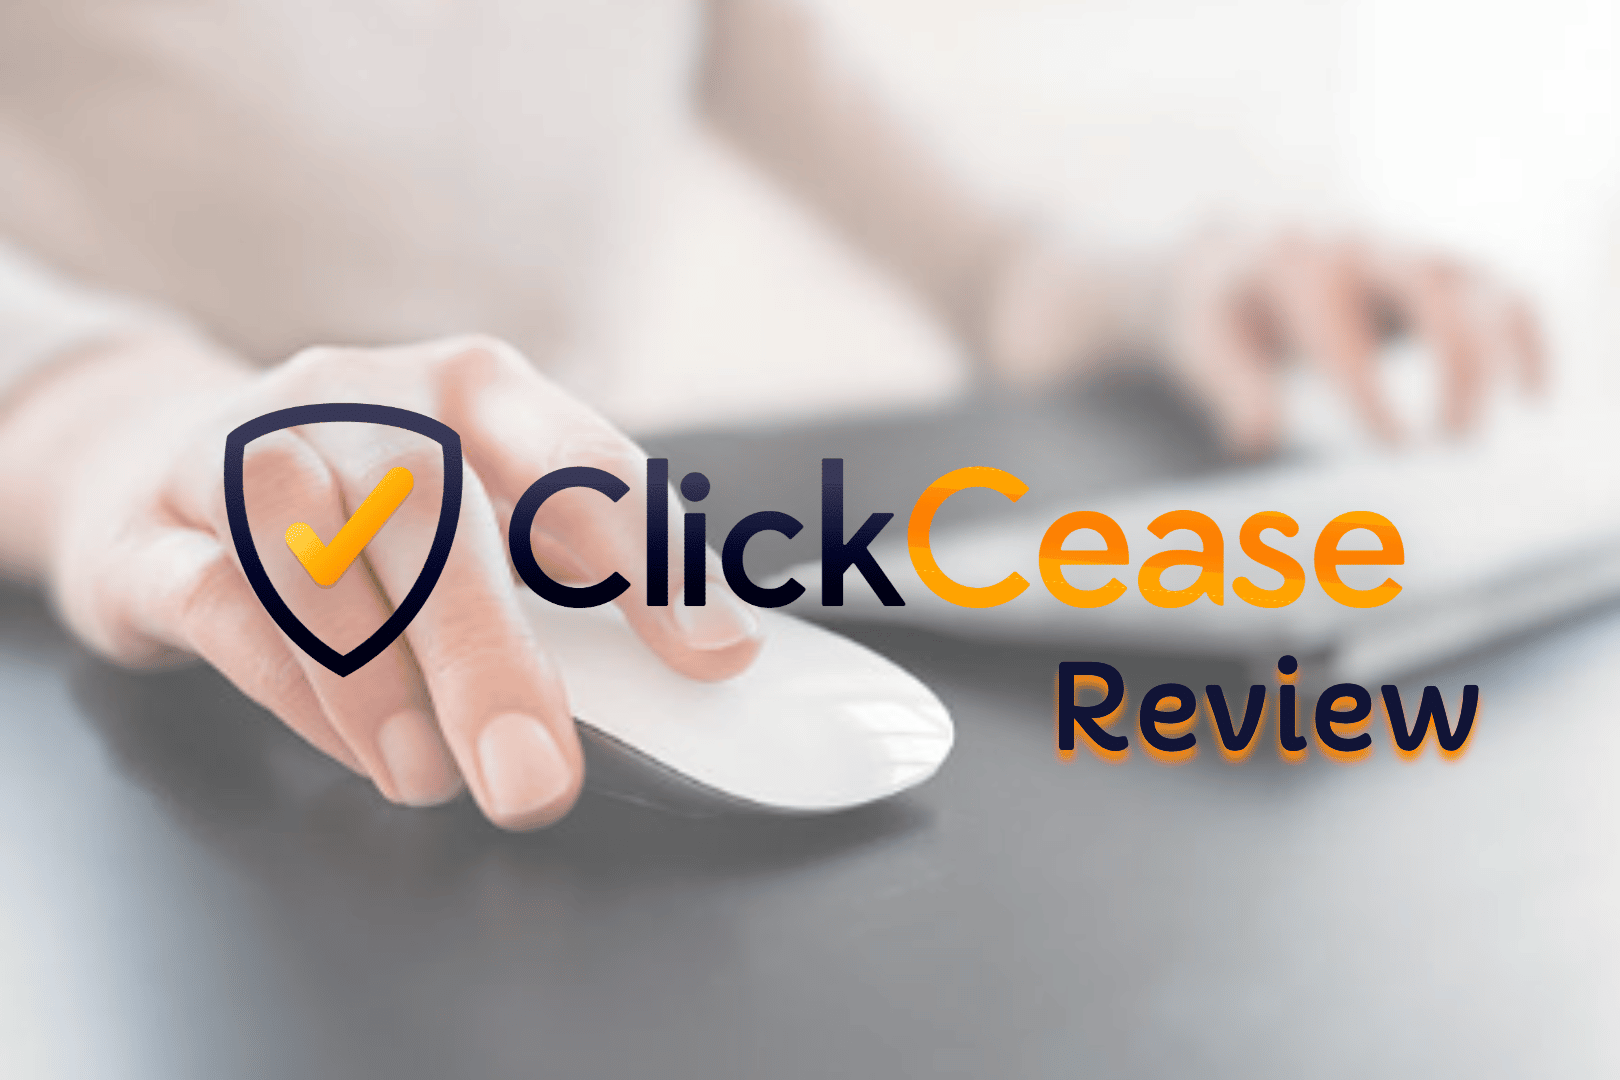 ClickCease review